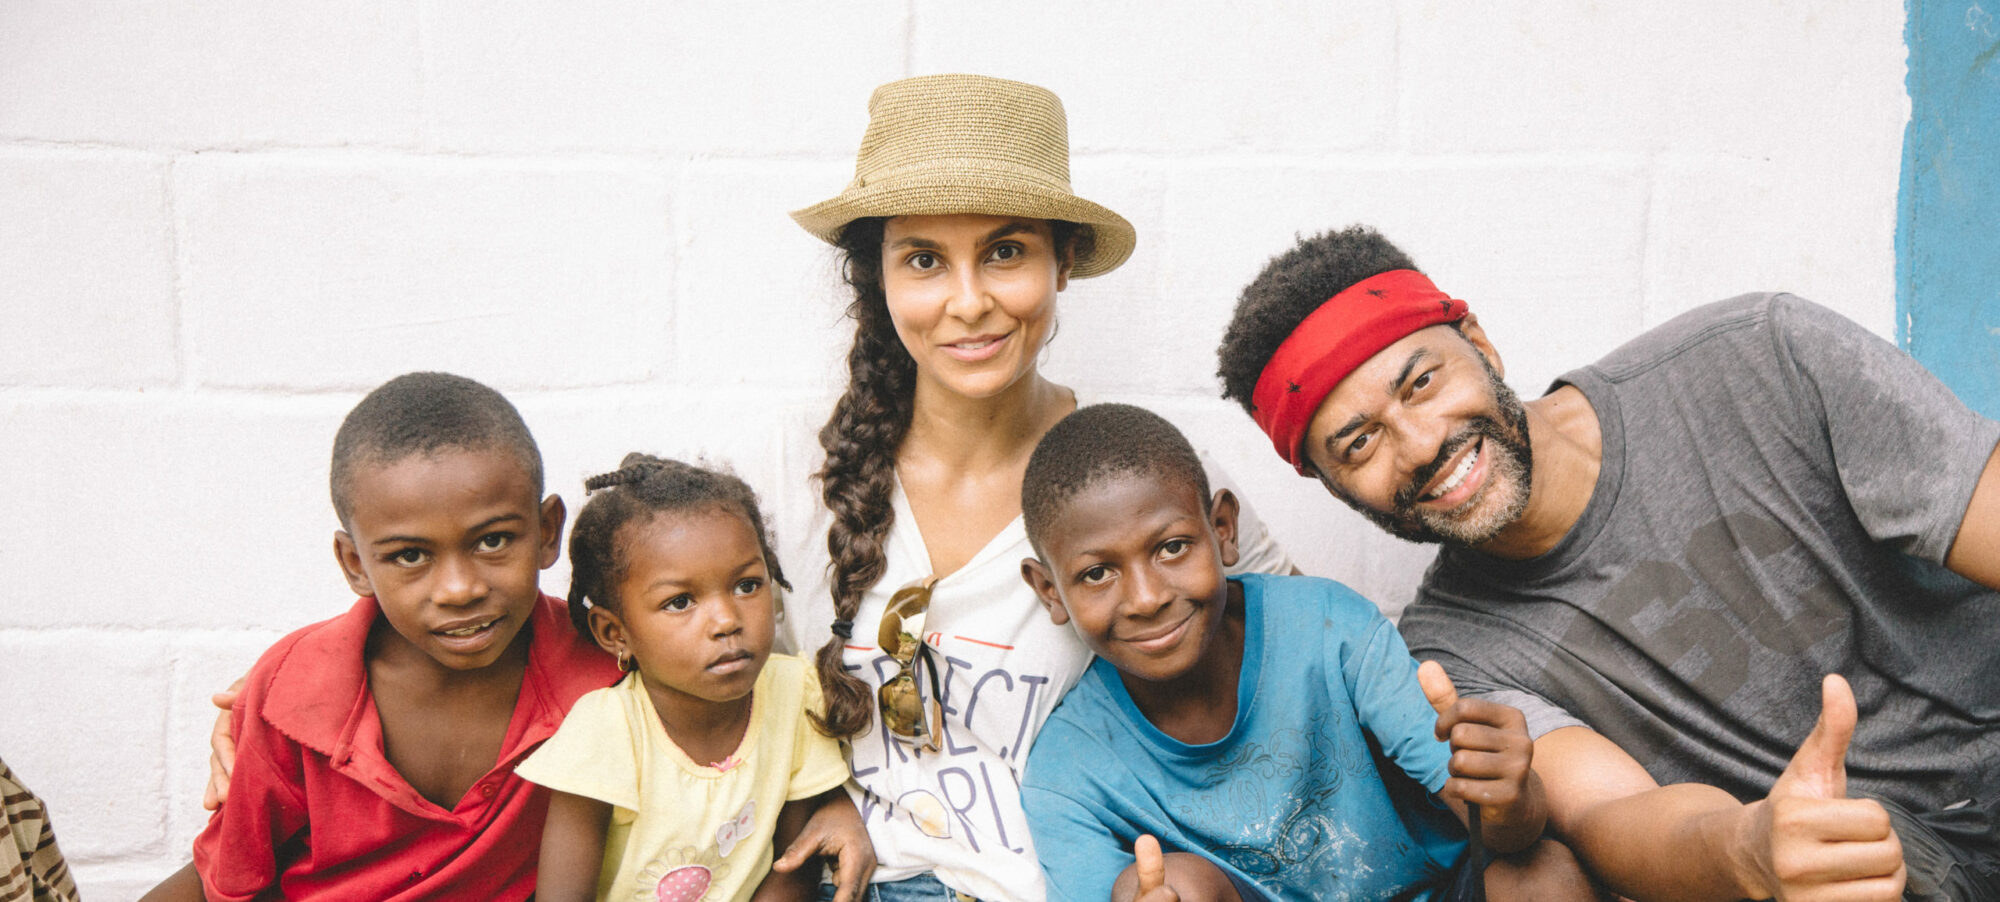 Manuela Testolini and Eric with kids in Haiti